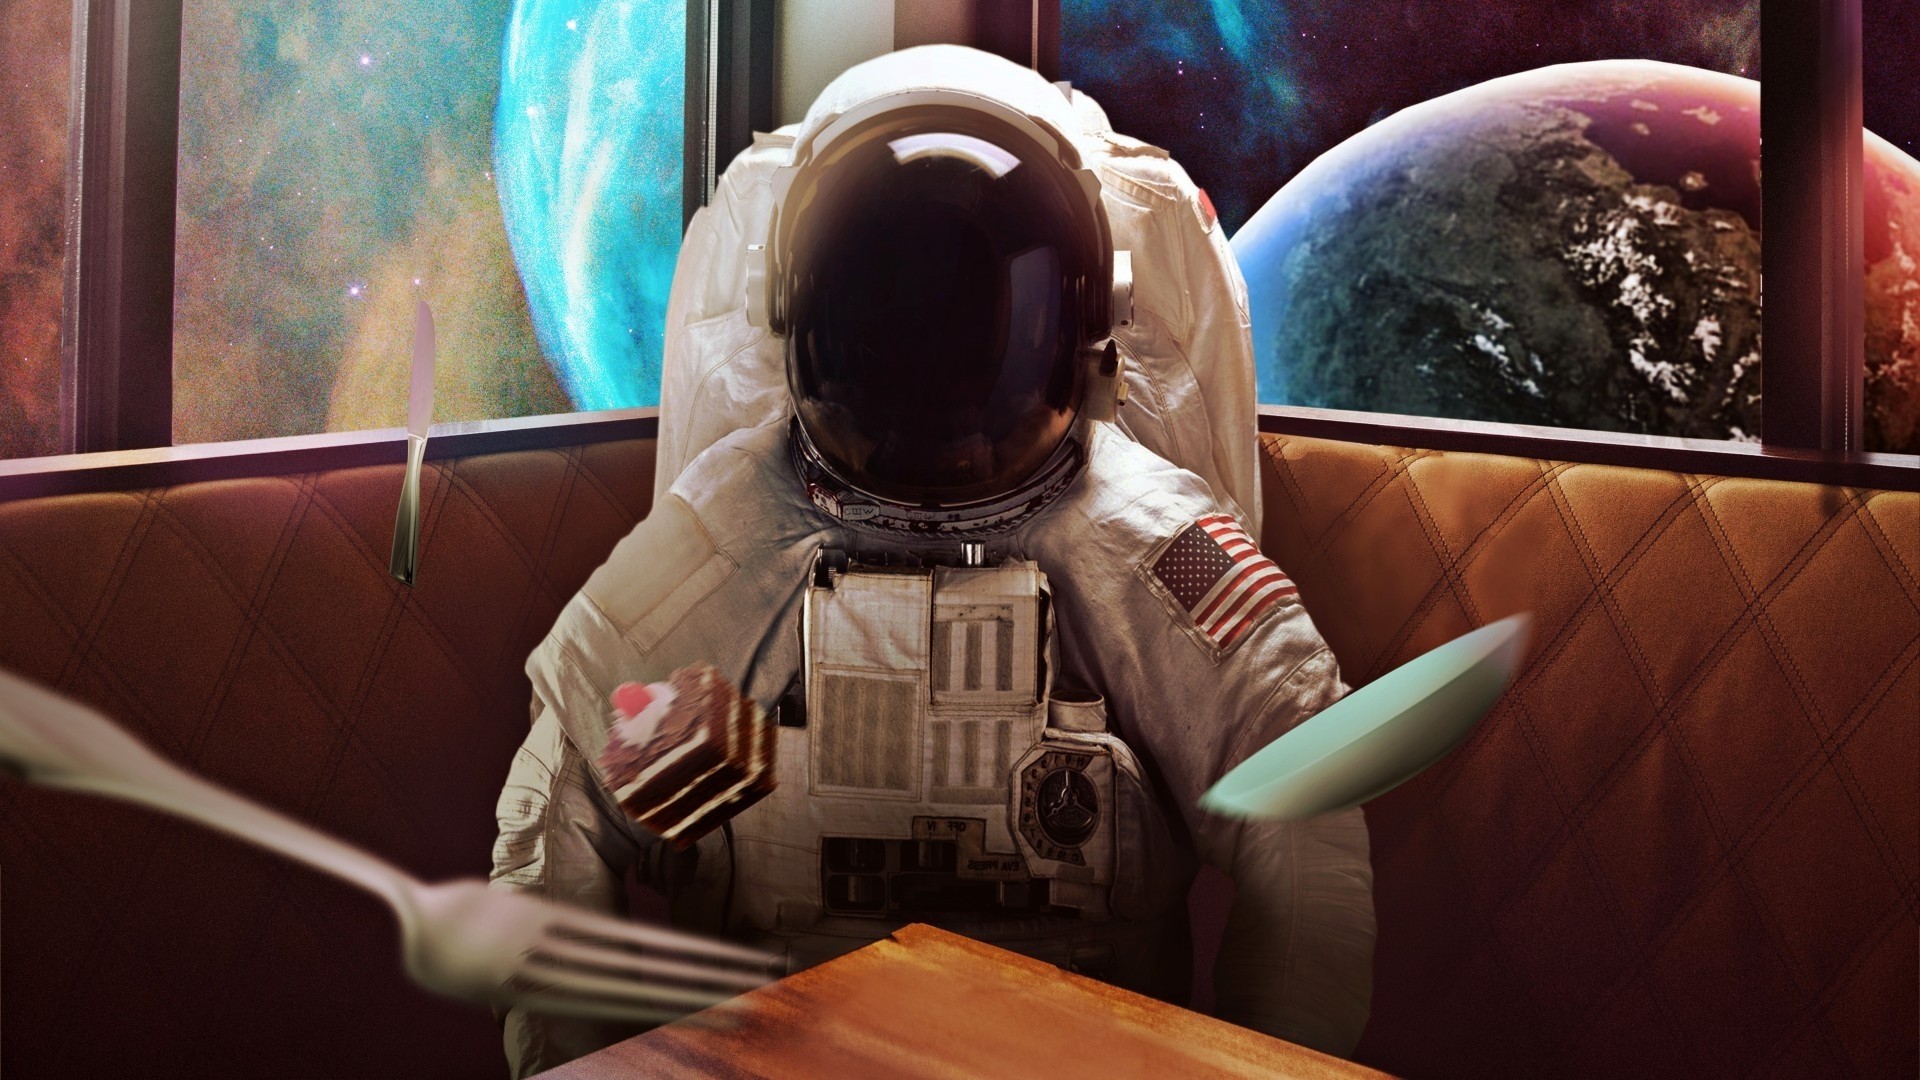 Astronaut Wallpaper image hd